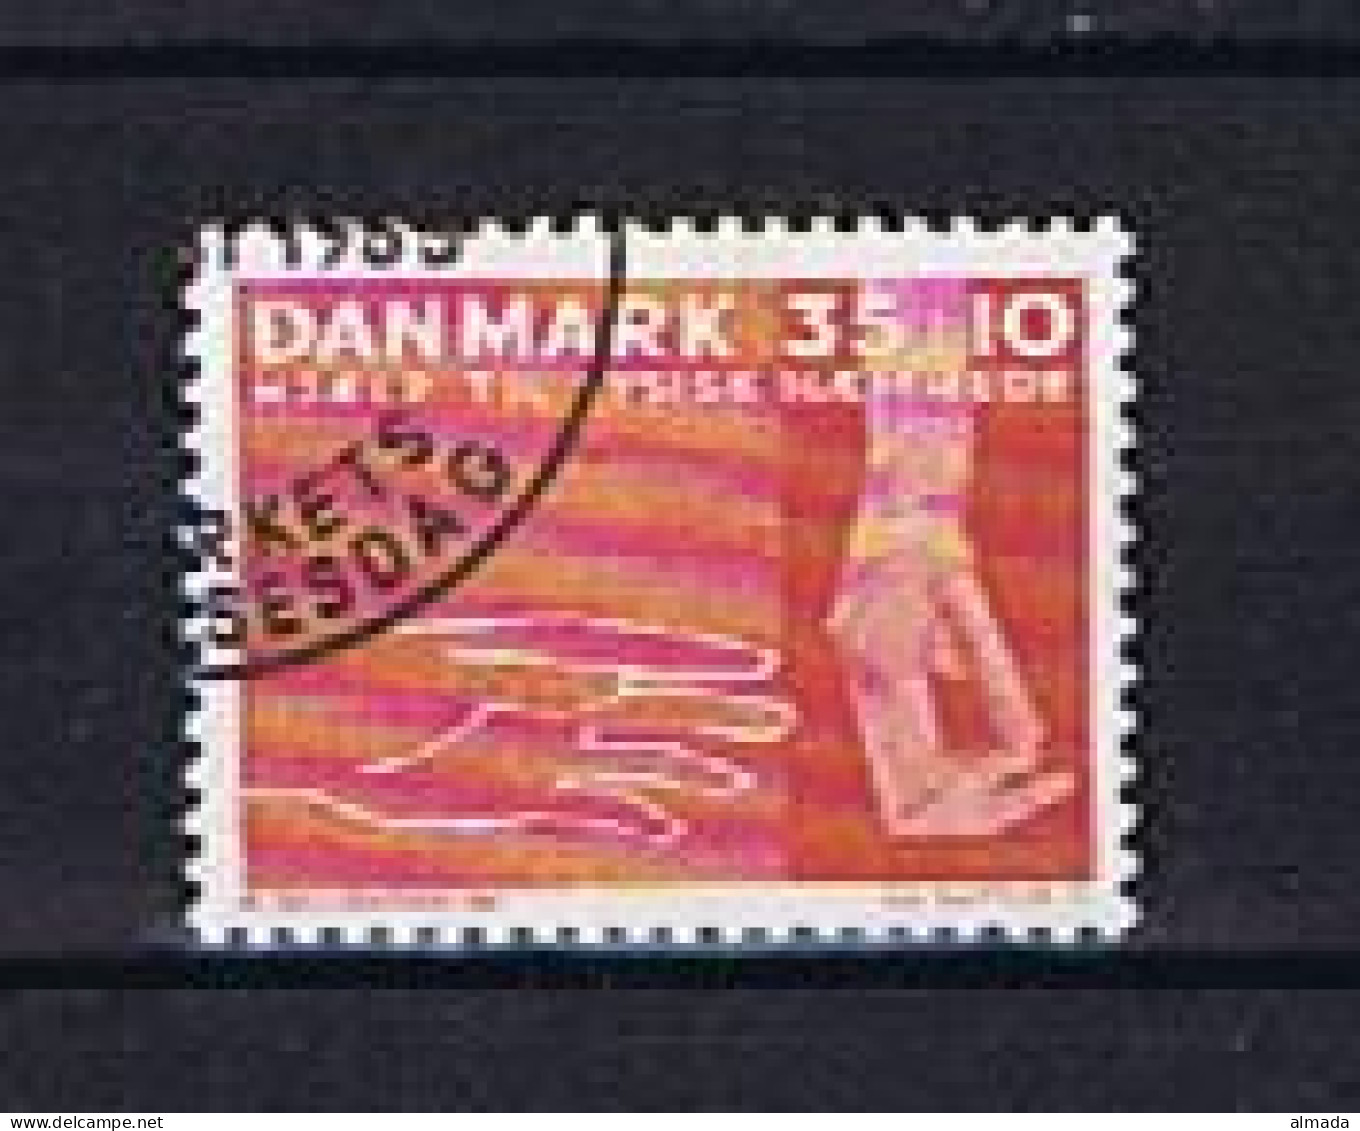 Dänemark, Denmark 1963: Michel 415x Norm. Papier Gestempelt, Used - Gebraucht